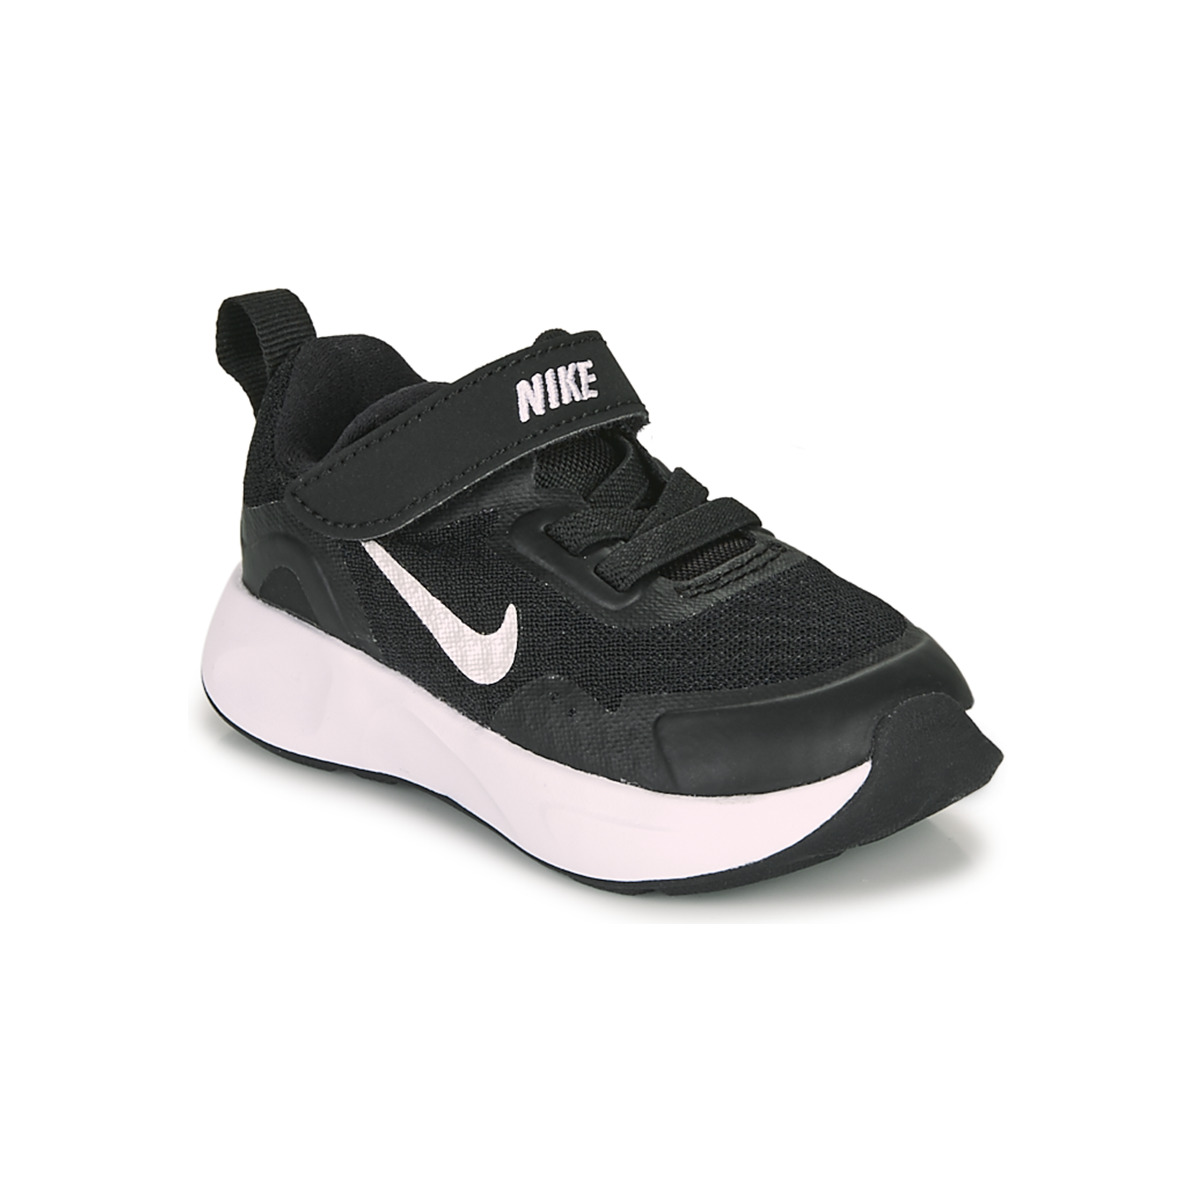 Nike WearAllDay Jongens Sneakers - Black/White - Maat 17